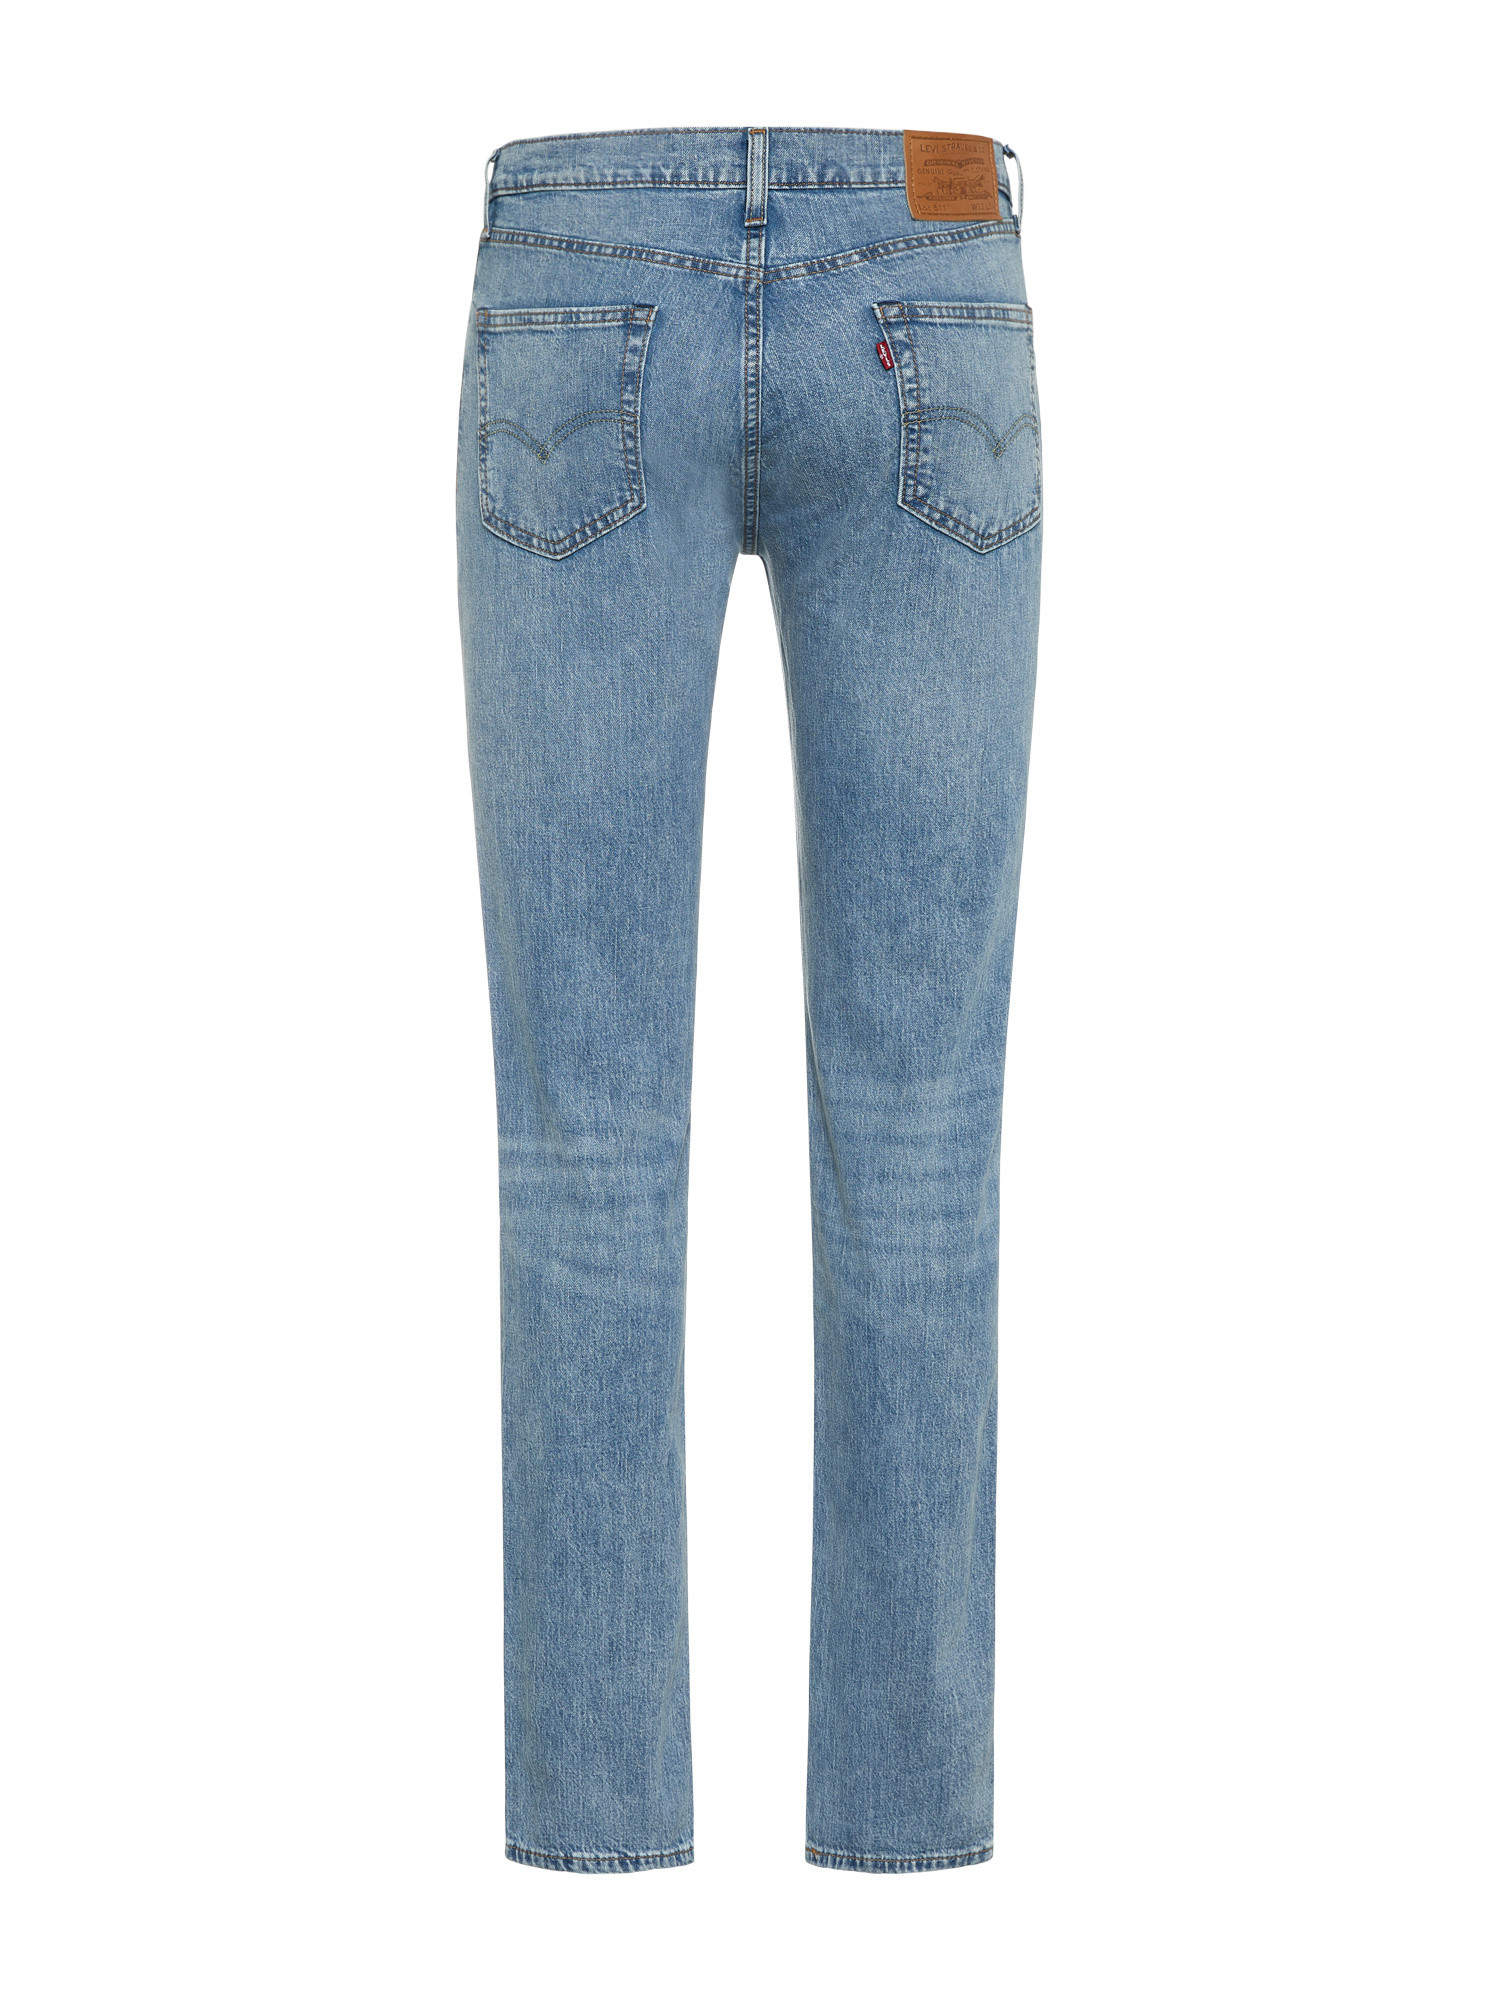 Levi’s - Jeans 511 slim fit, Azzurro, large image number 1